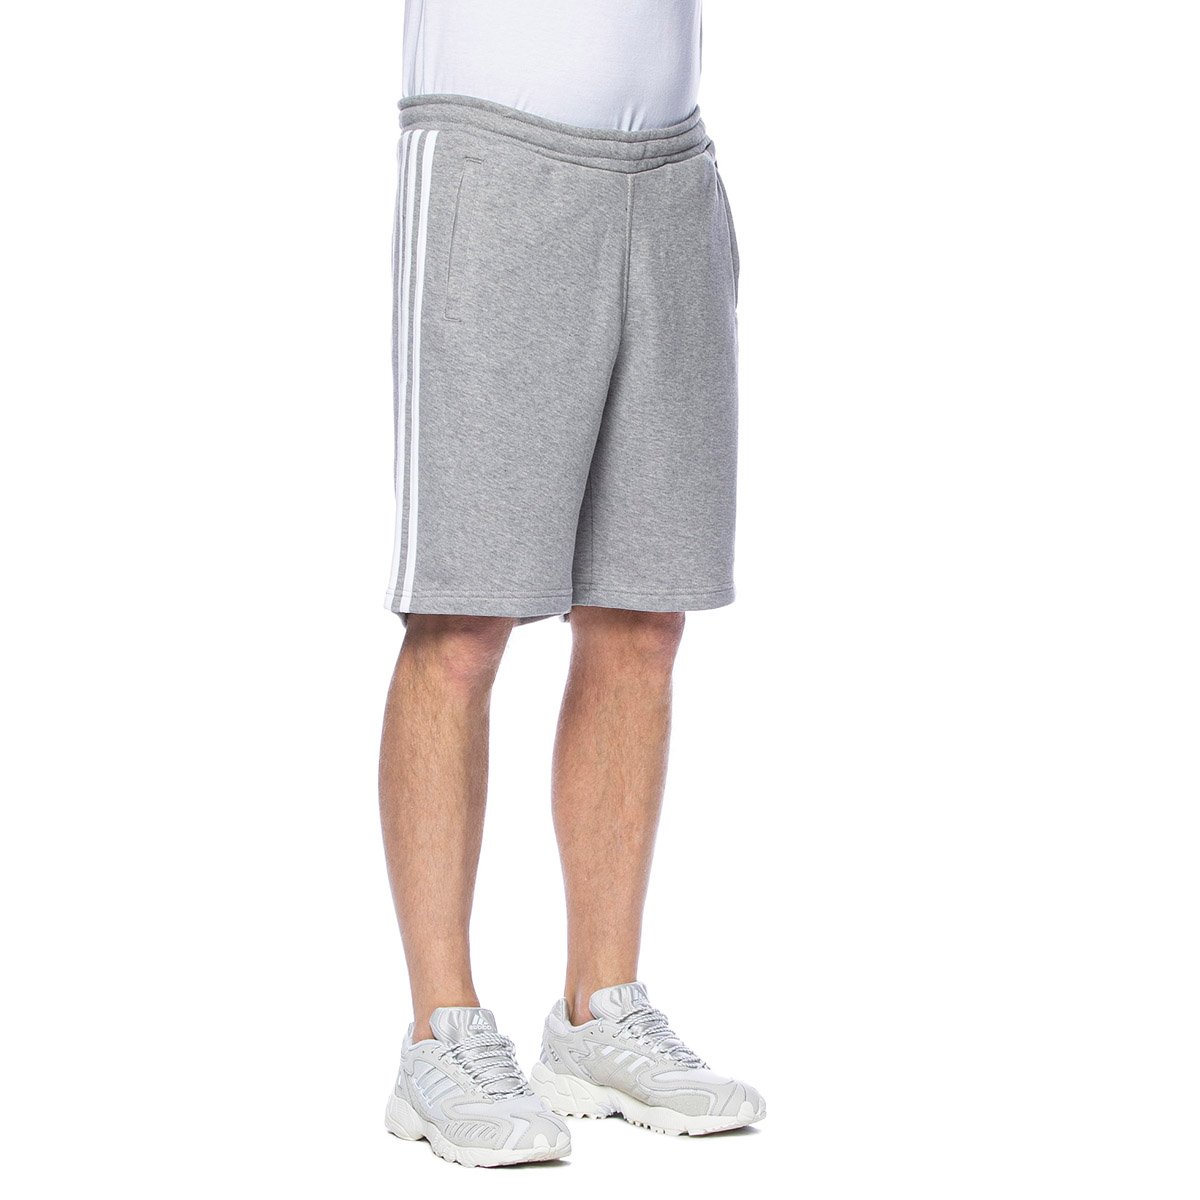 Adidas Originals 3-Stripe Short medium grey heather